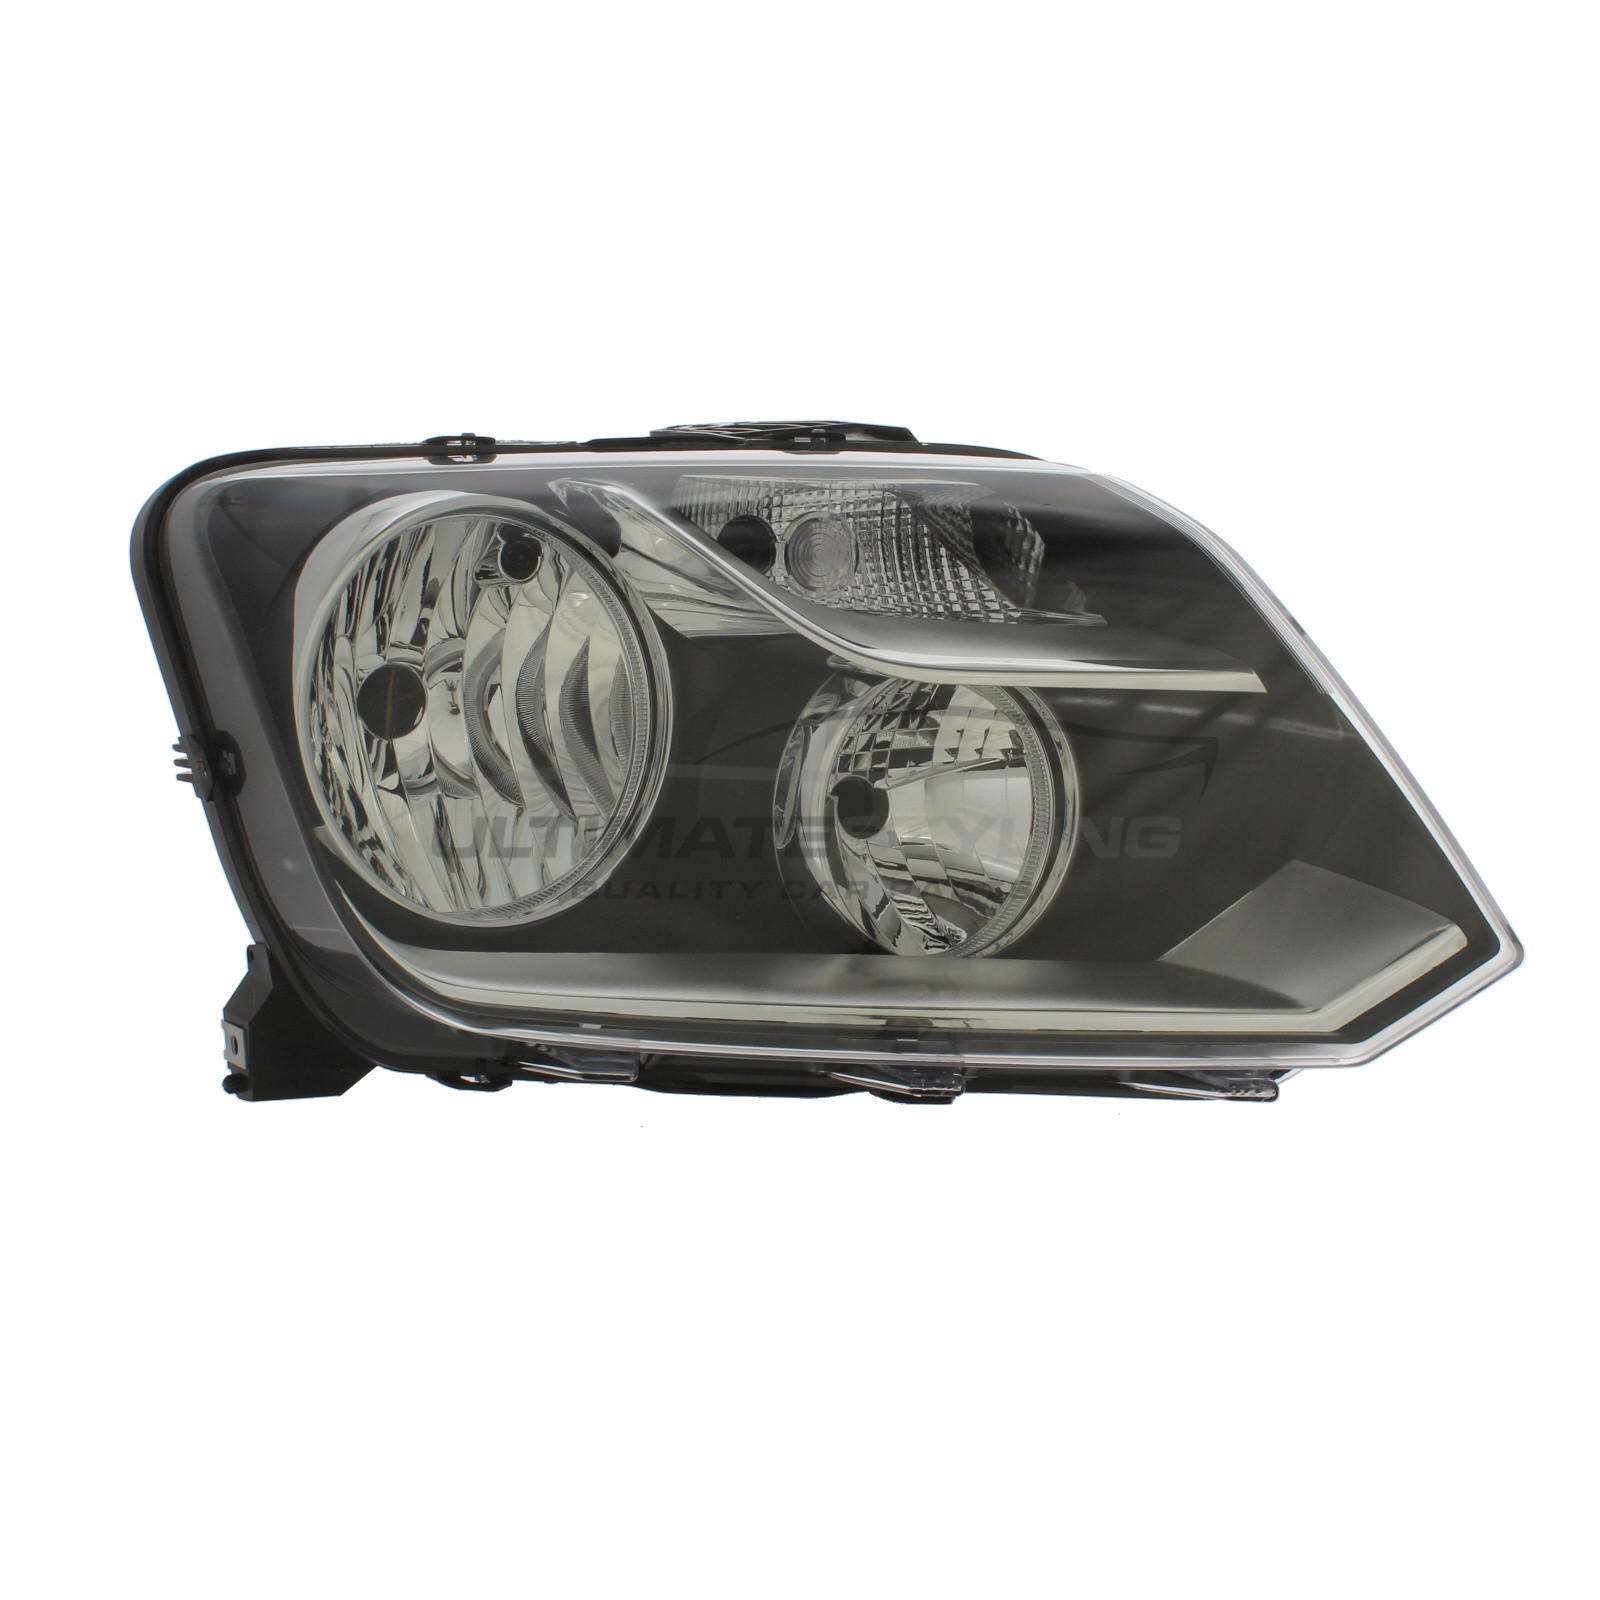 Headlight / Headlamp for VW Amarok